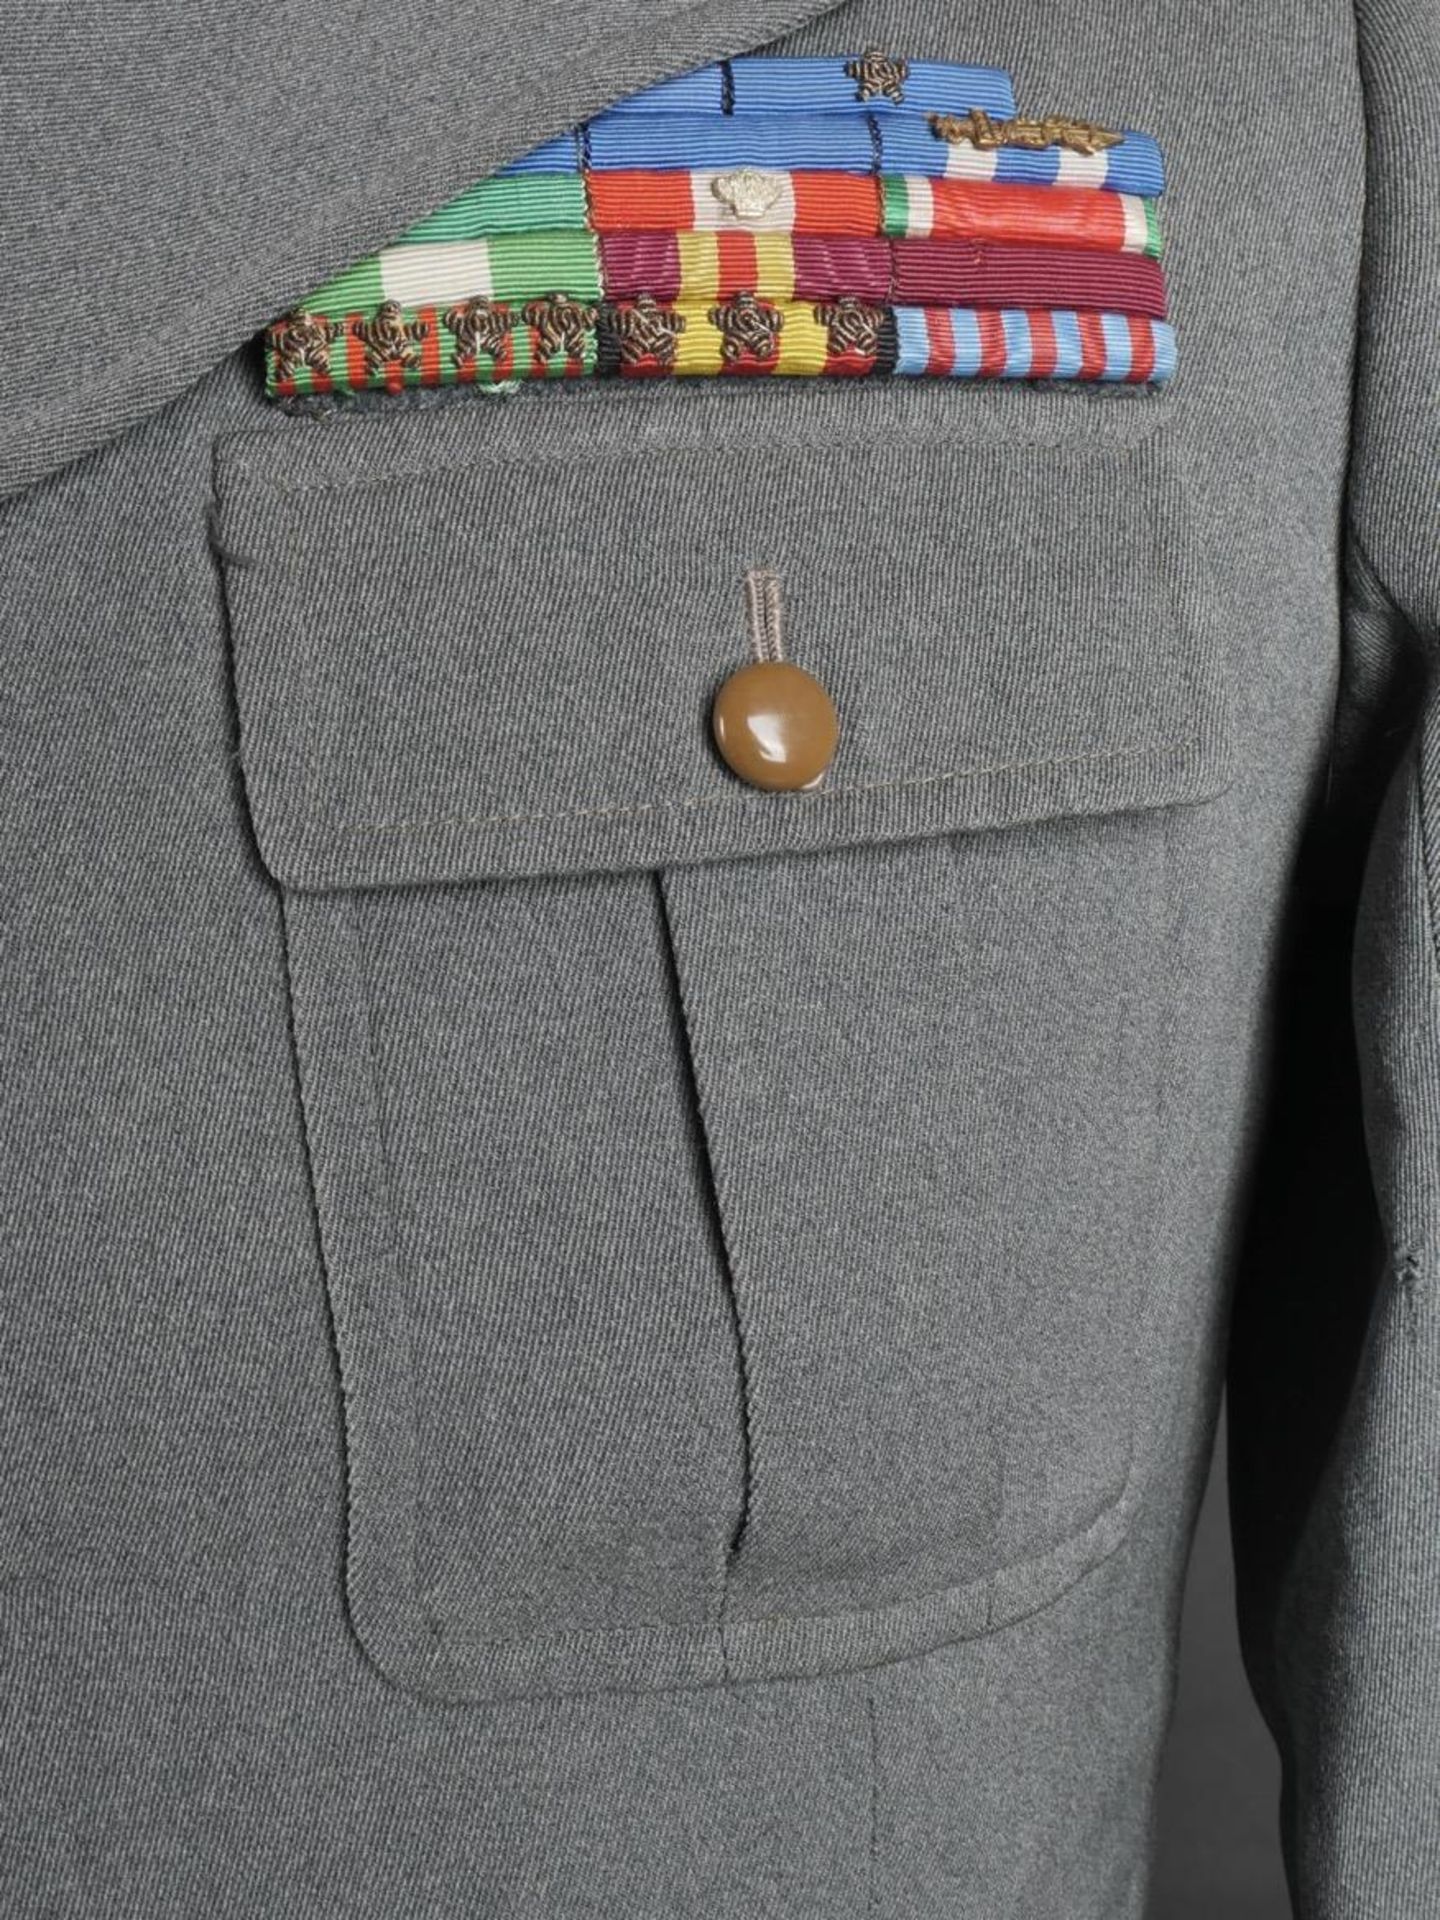 Vareuse de Carlo Boromi, colonel du Regiment Artillerie de la Division Bergamo. Jacket of Carlo Bo - Image 6 of 19